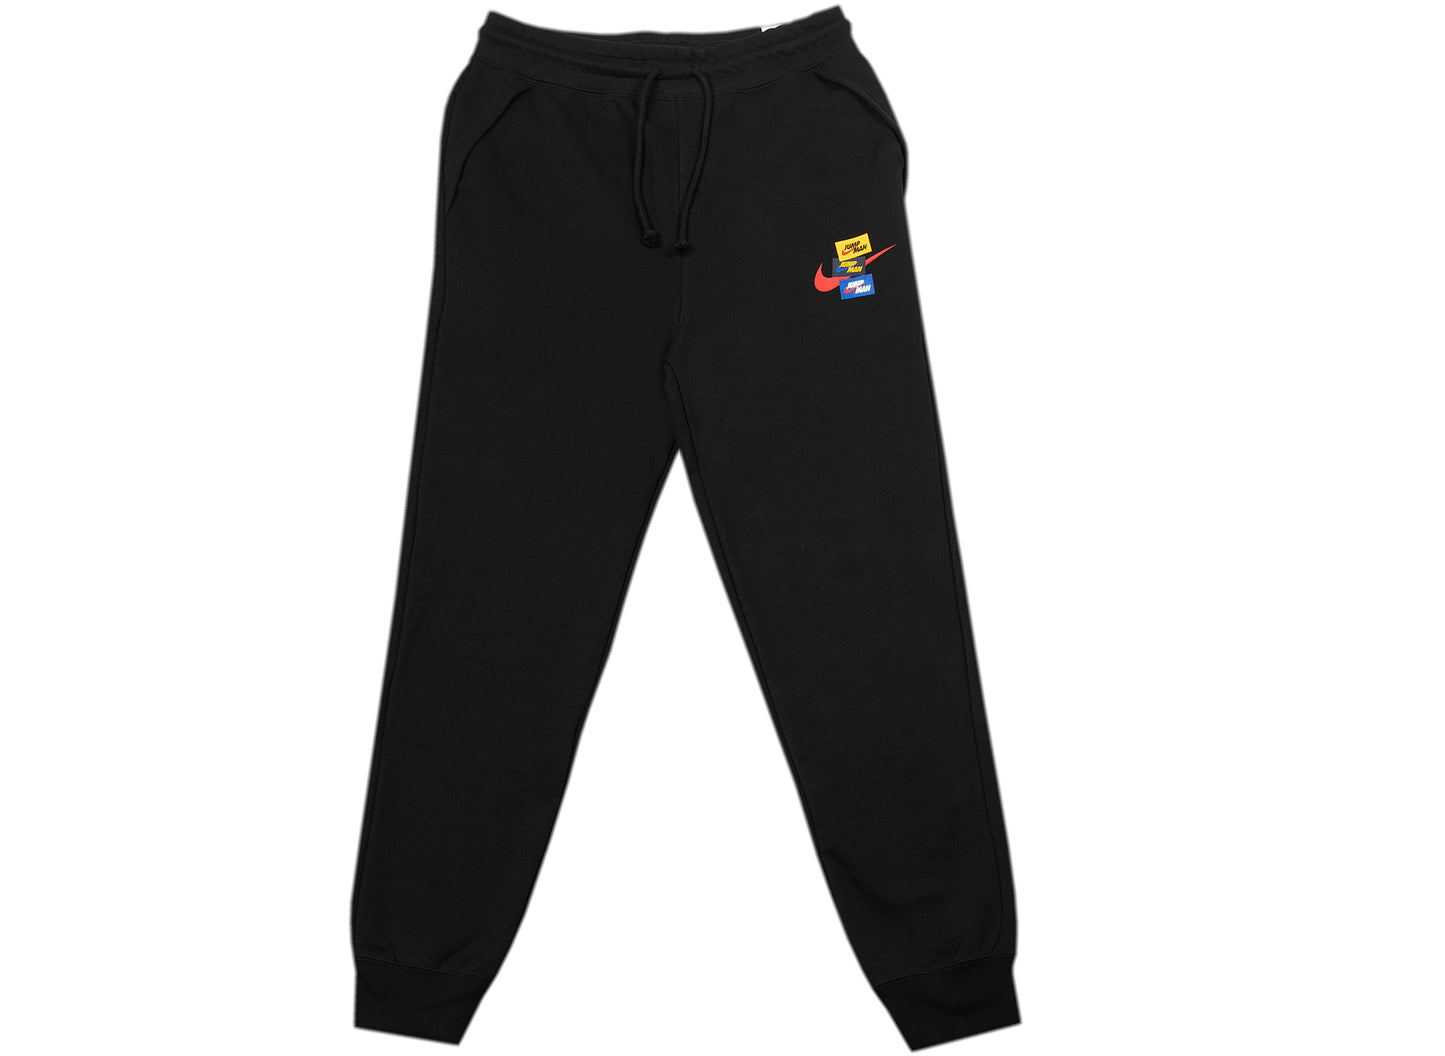 Jordan Jumpman Fleece Pants in Black